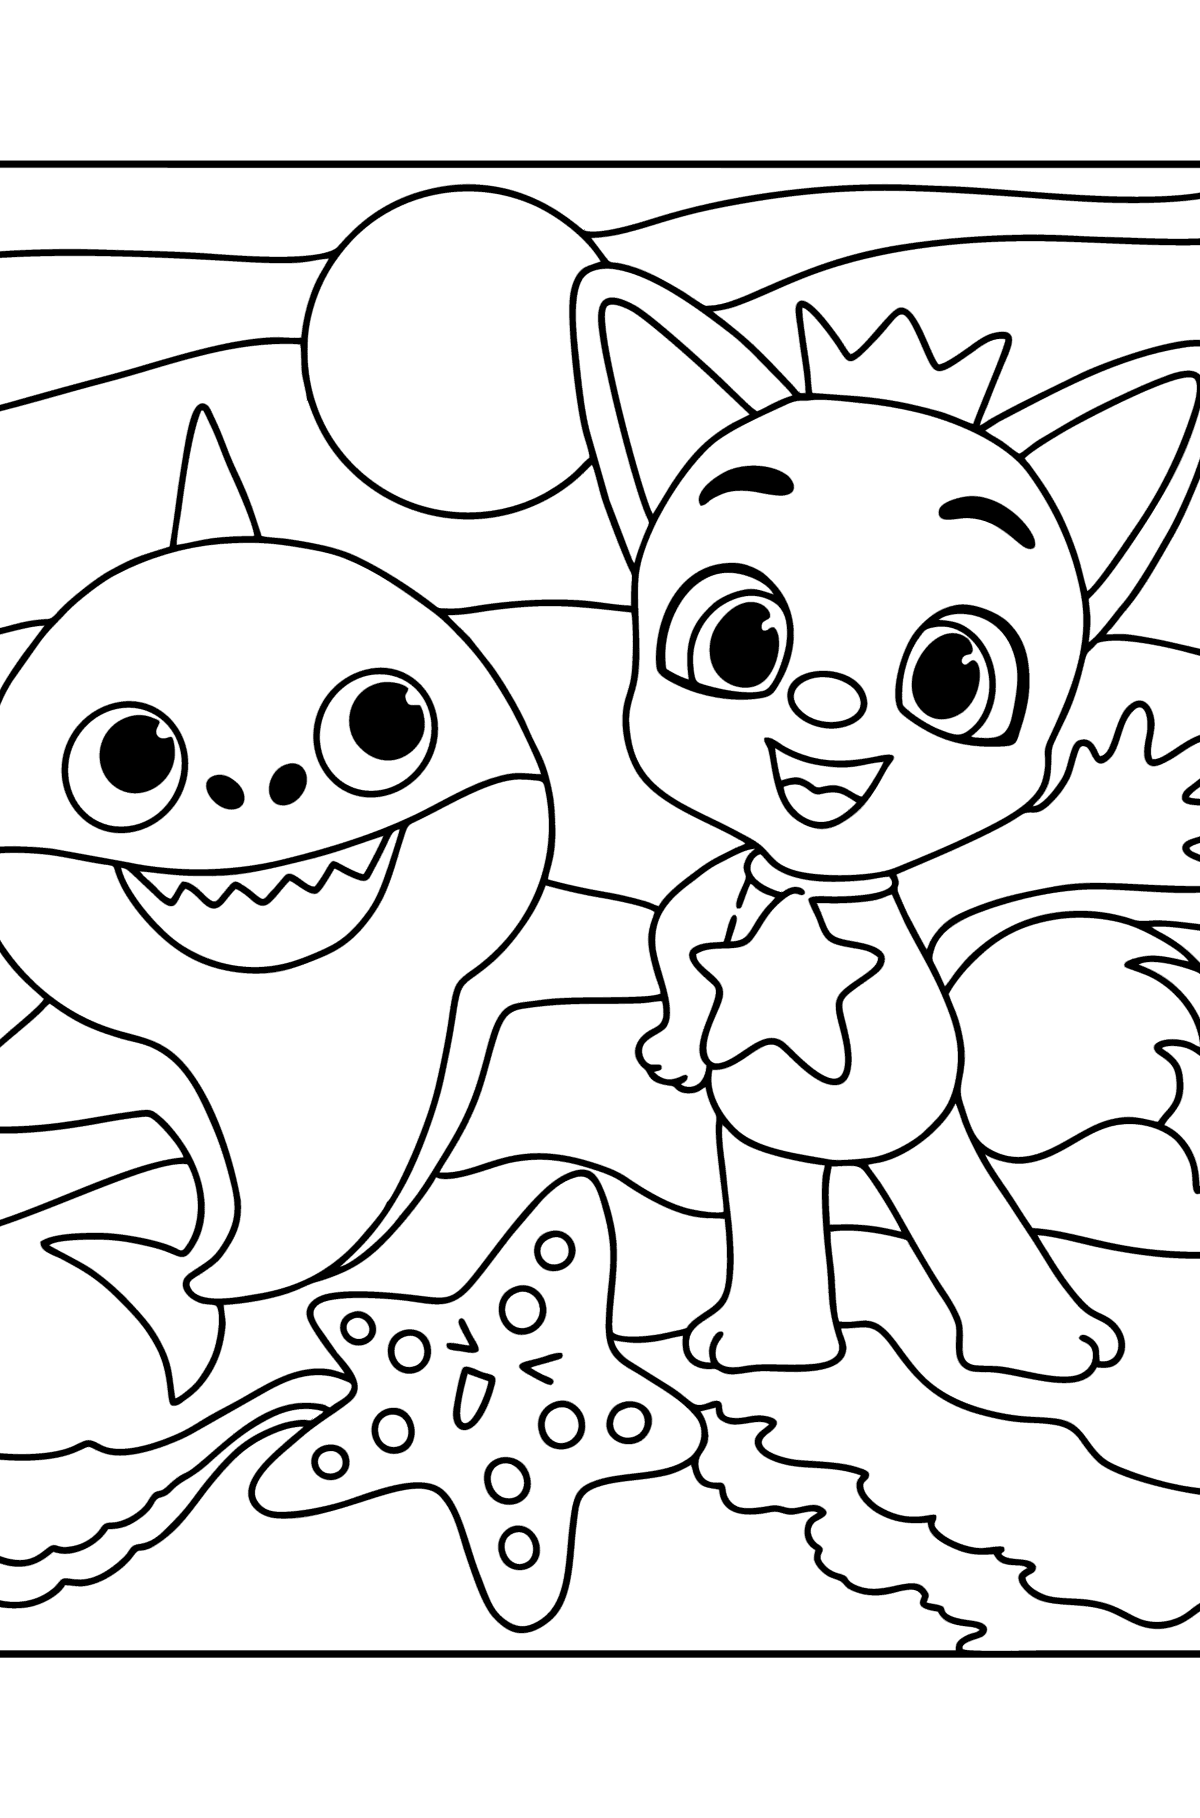 Dibujo de Pinkfong Baby shark para colorear - Dibujos para Colorear para Niños